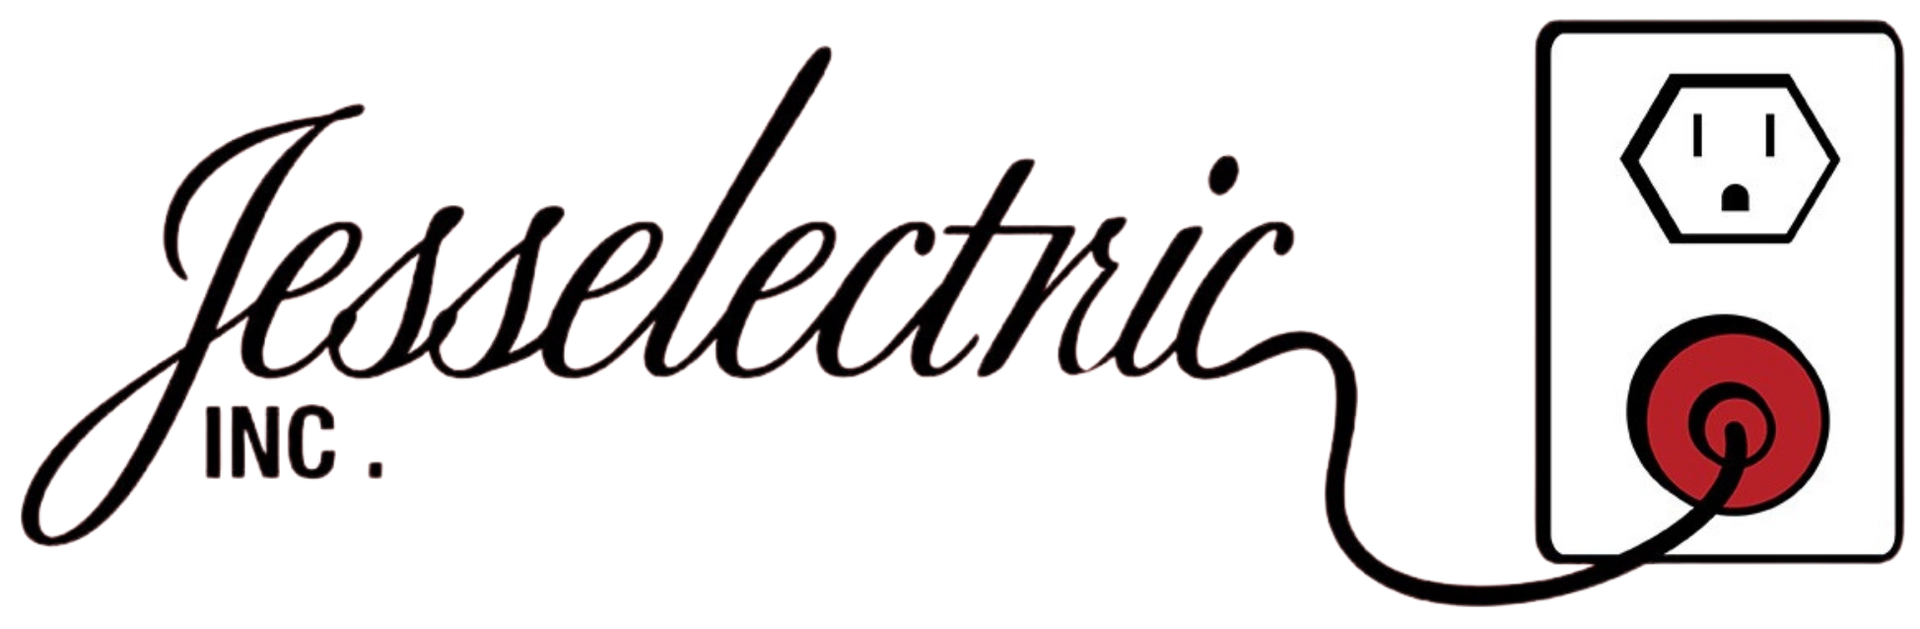 Jesselectric, Inc Logo